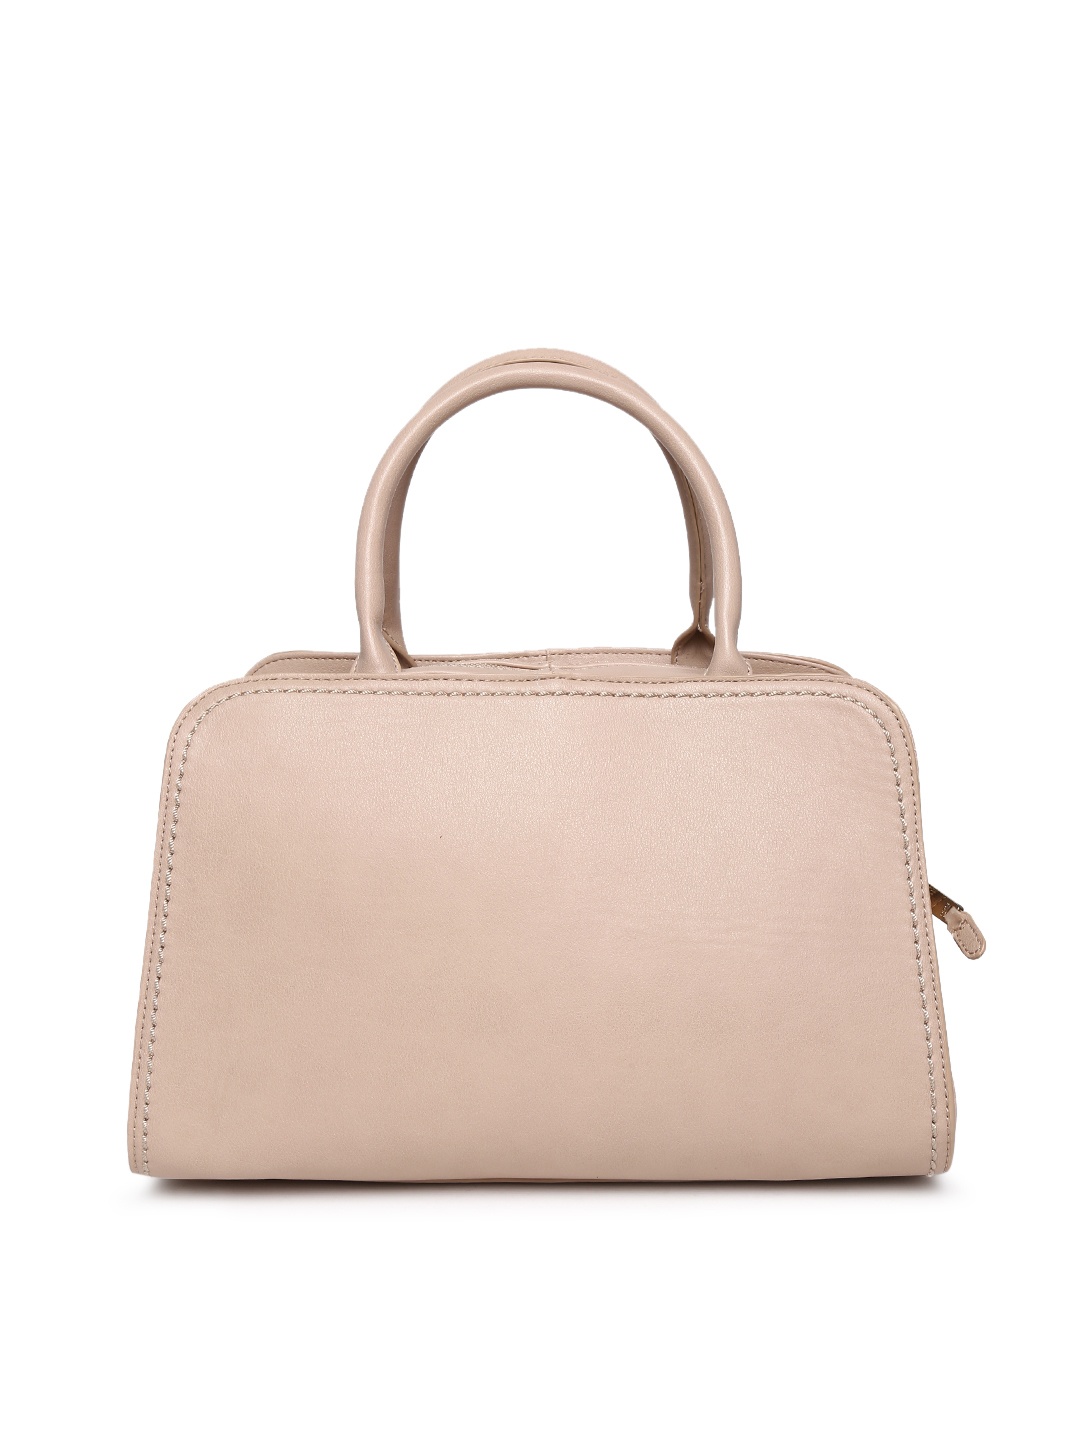 Myntra Parfois Beige Handbag with Sling Strap 790405 | Buy Myntra ...